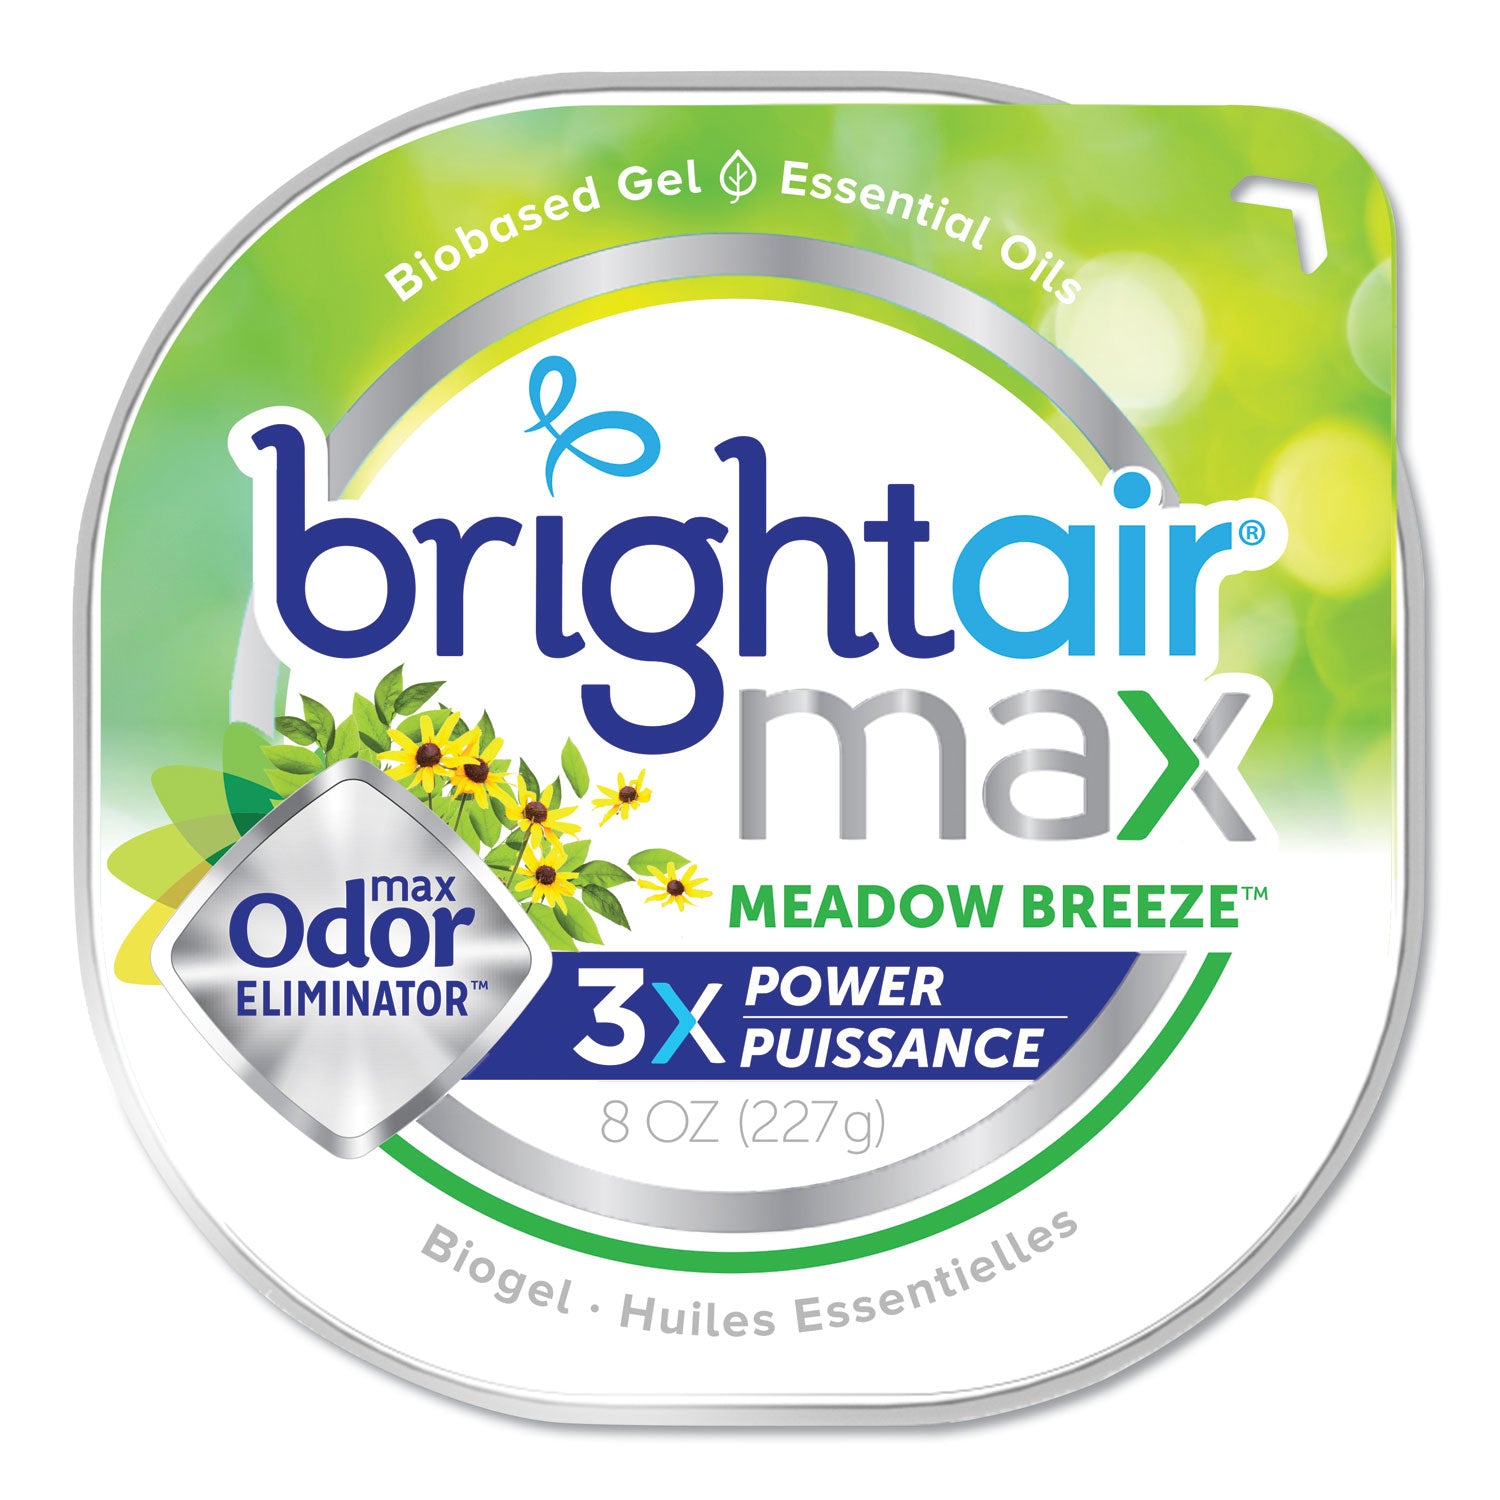 Max Odor Eliminator Air Freshener, Meadow Breeze, 8 oz Jar, 6/Carton - 2